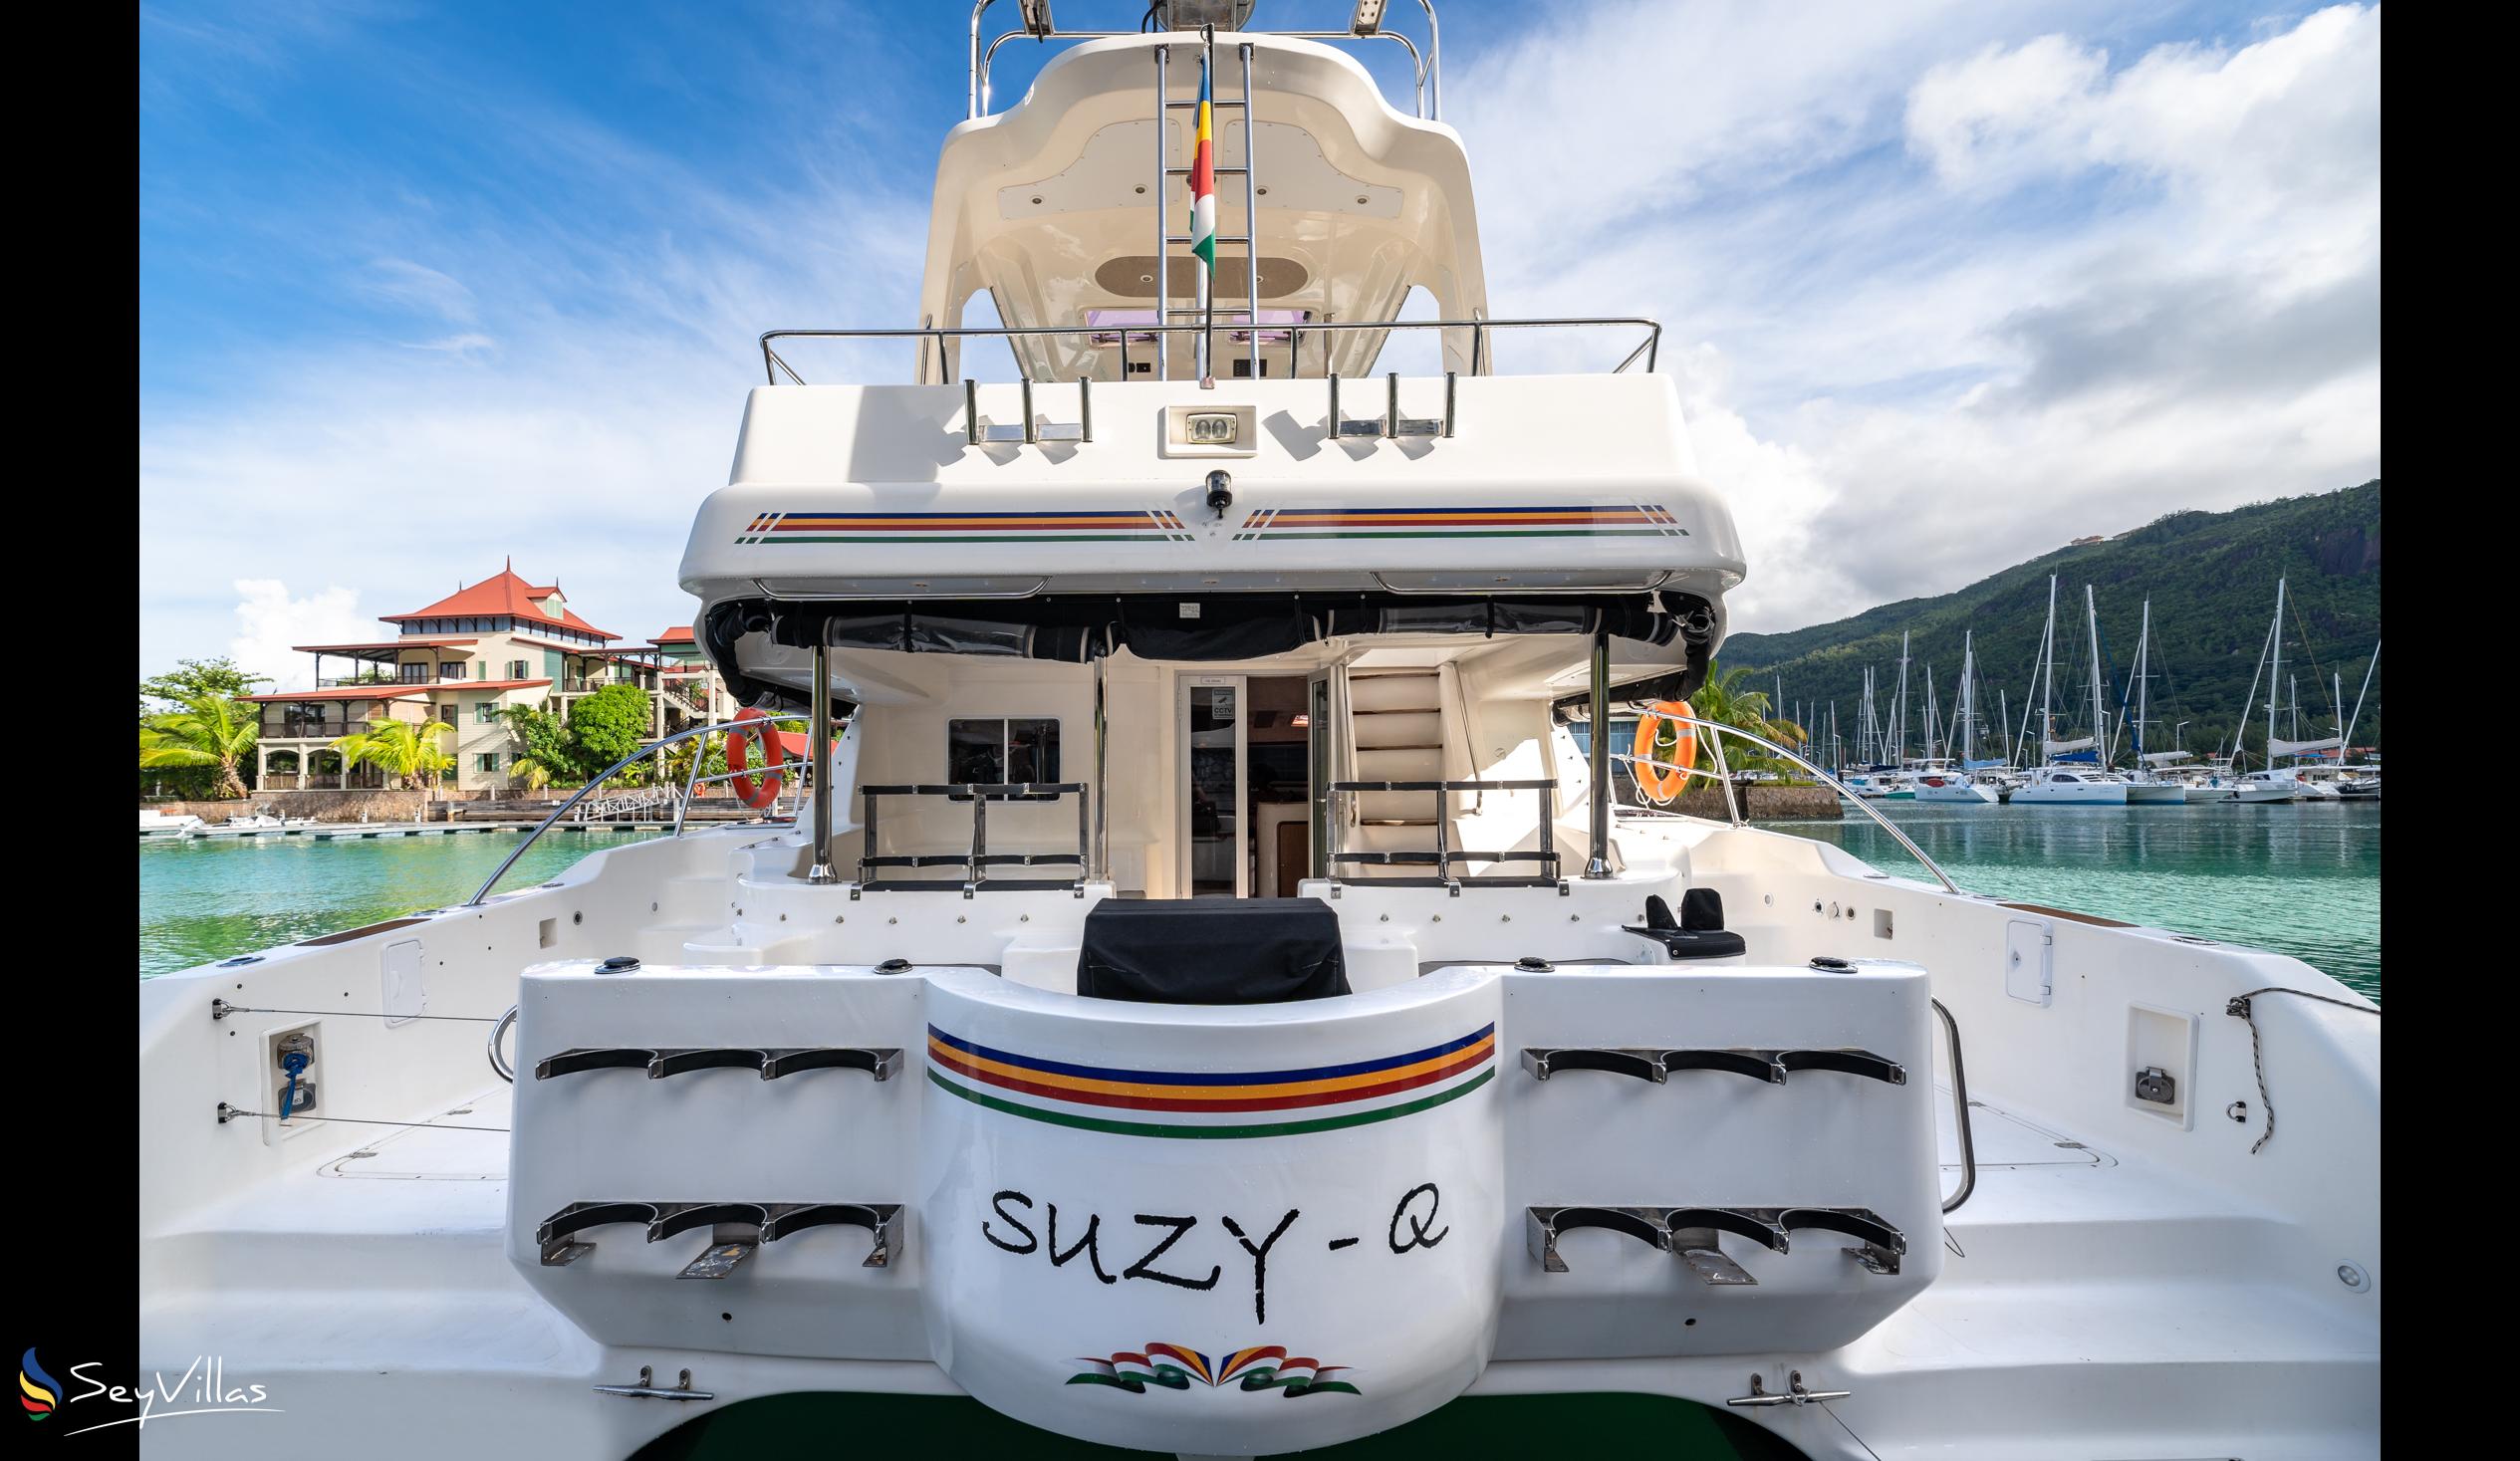 Photo 58: Seyscapes Yacht Charter - Full charter Suzy Q - Seychelles (Seychelles)